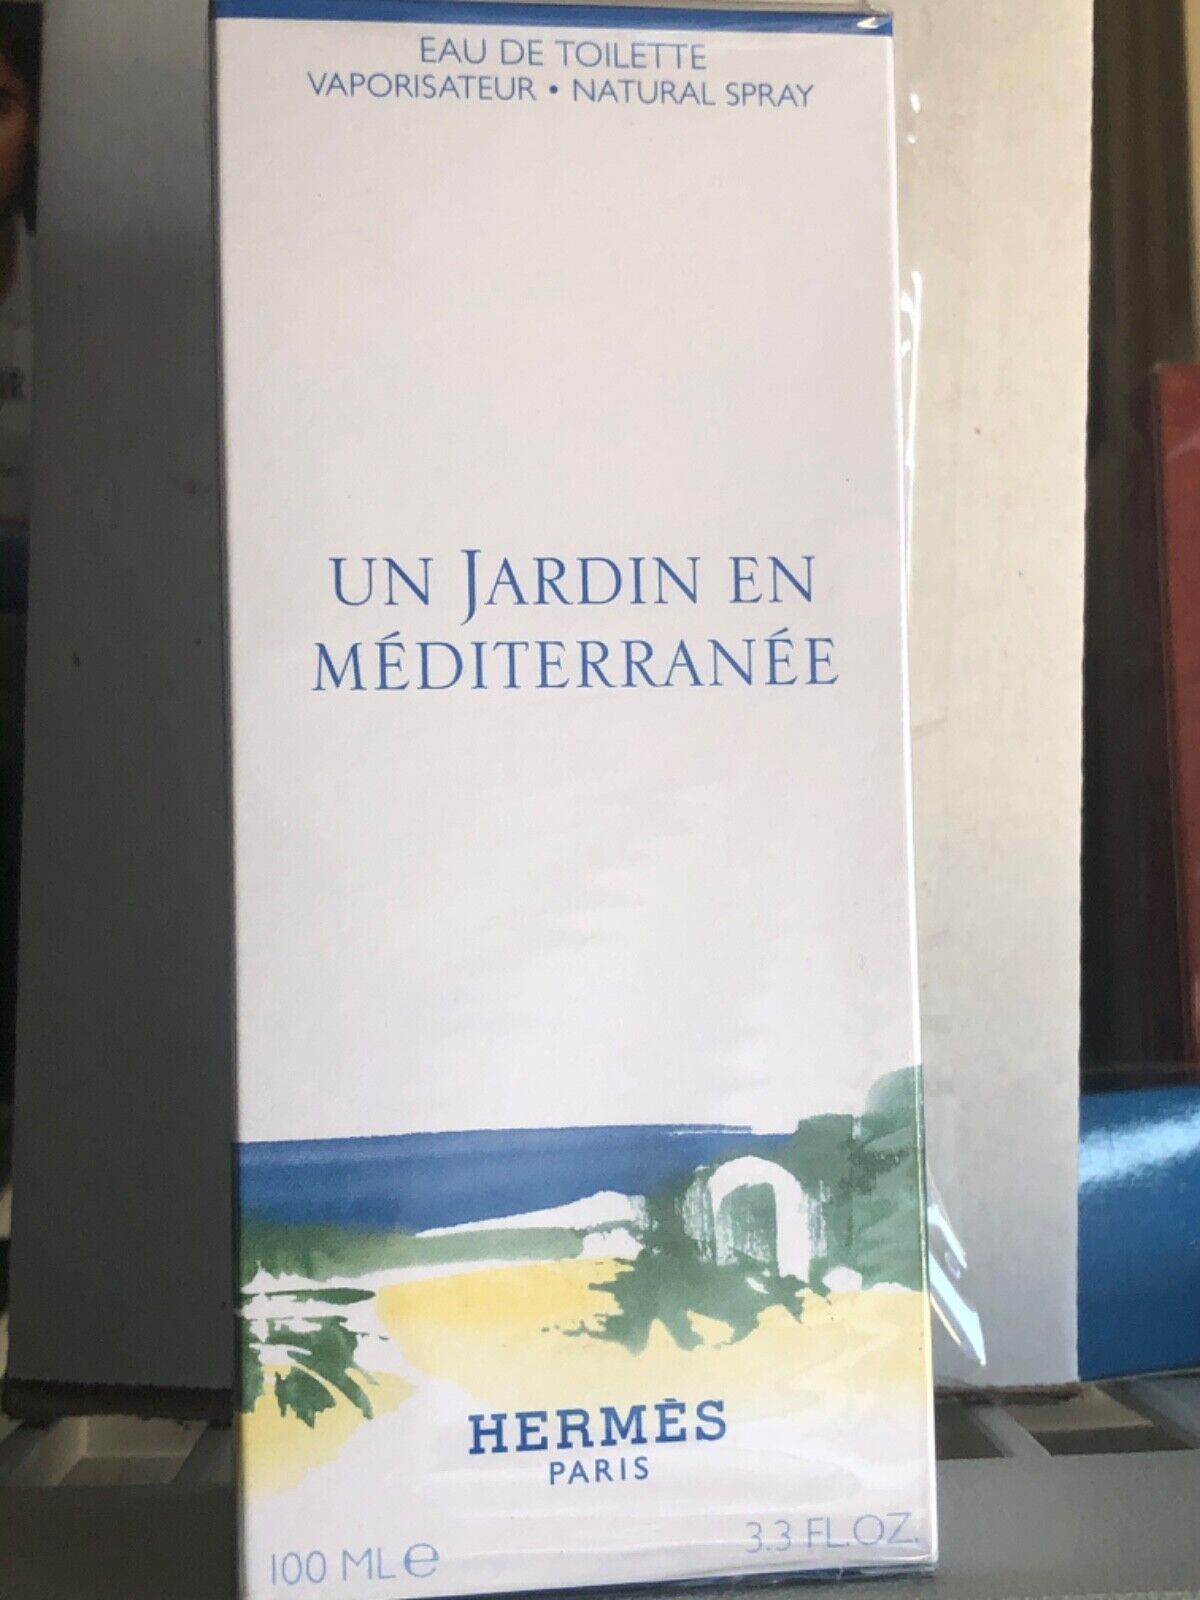 Un Jardin En Mediterranee by Hermes, 3.3 oz EDT Spray Unisex